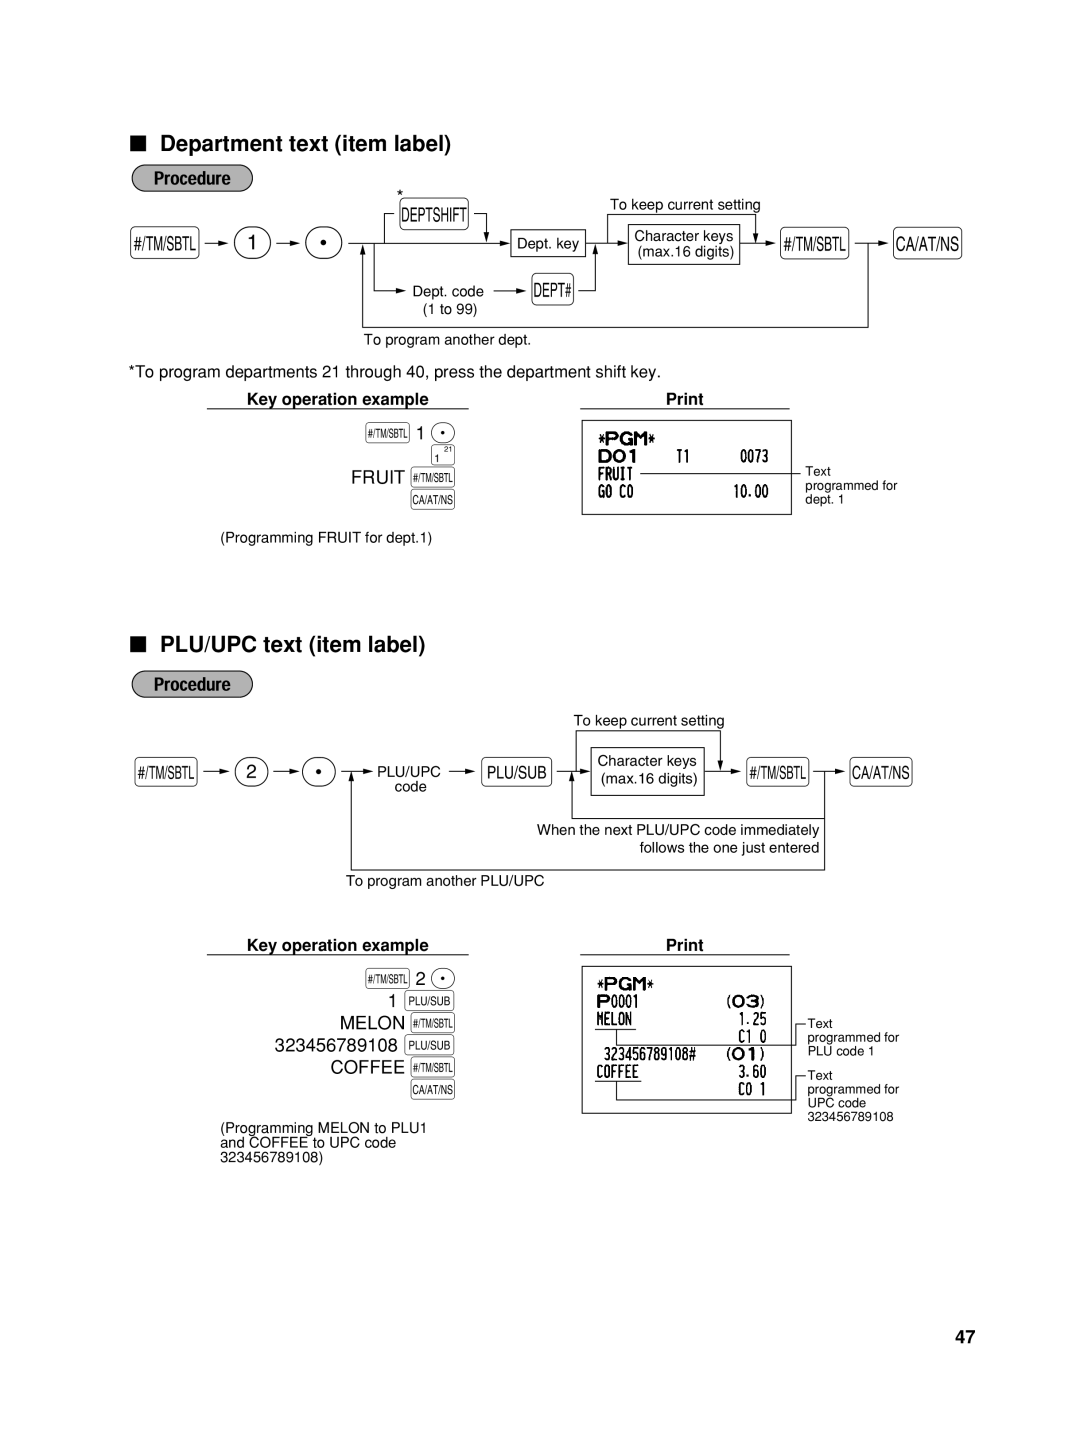 Sharp XE-A42S s 1 P, s2 P, Department text item label, PLU/UPC text item label, Key operation example, Print 